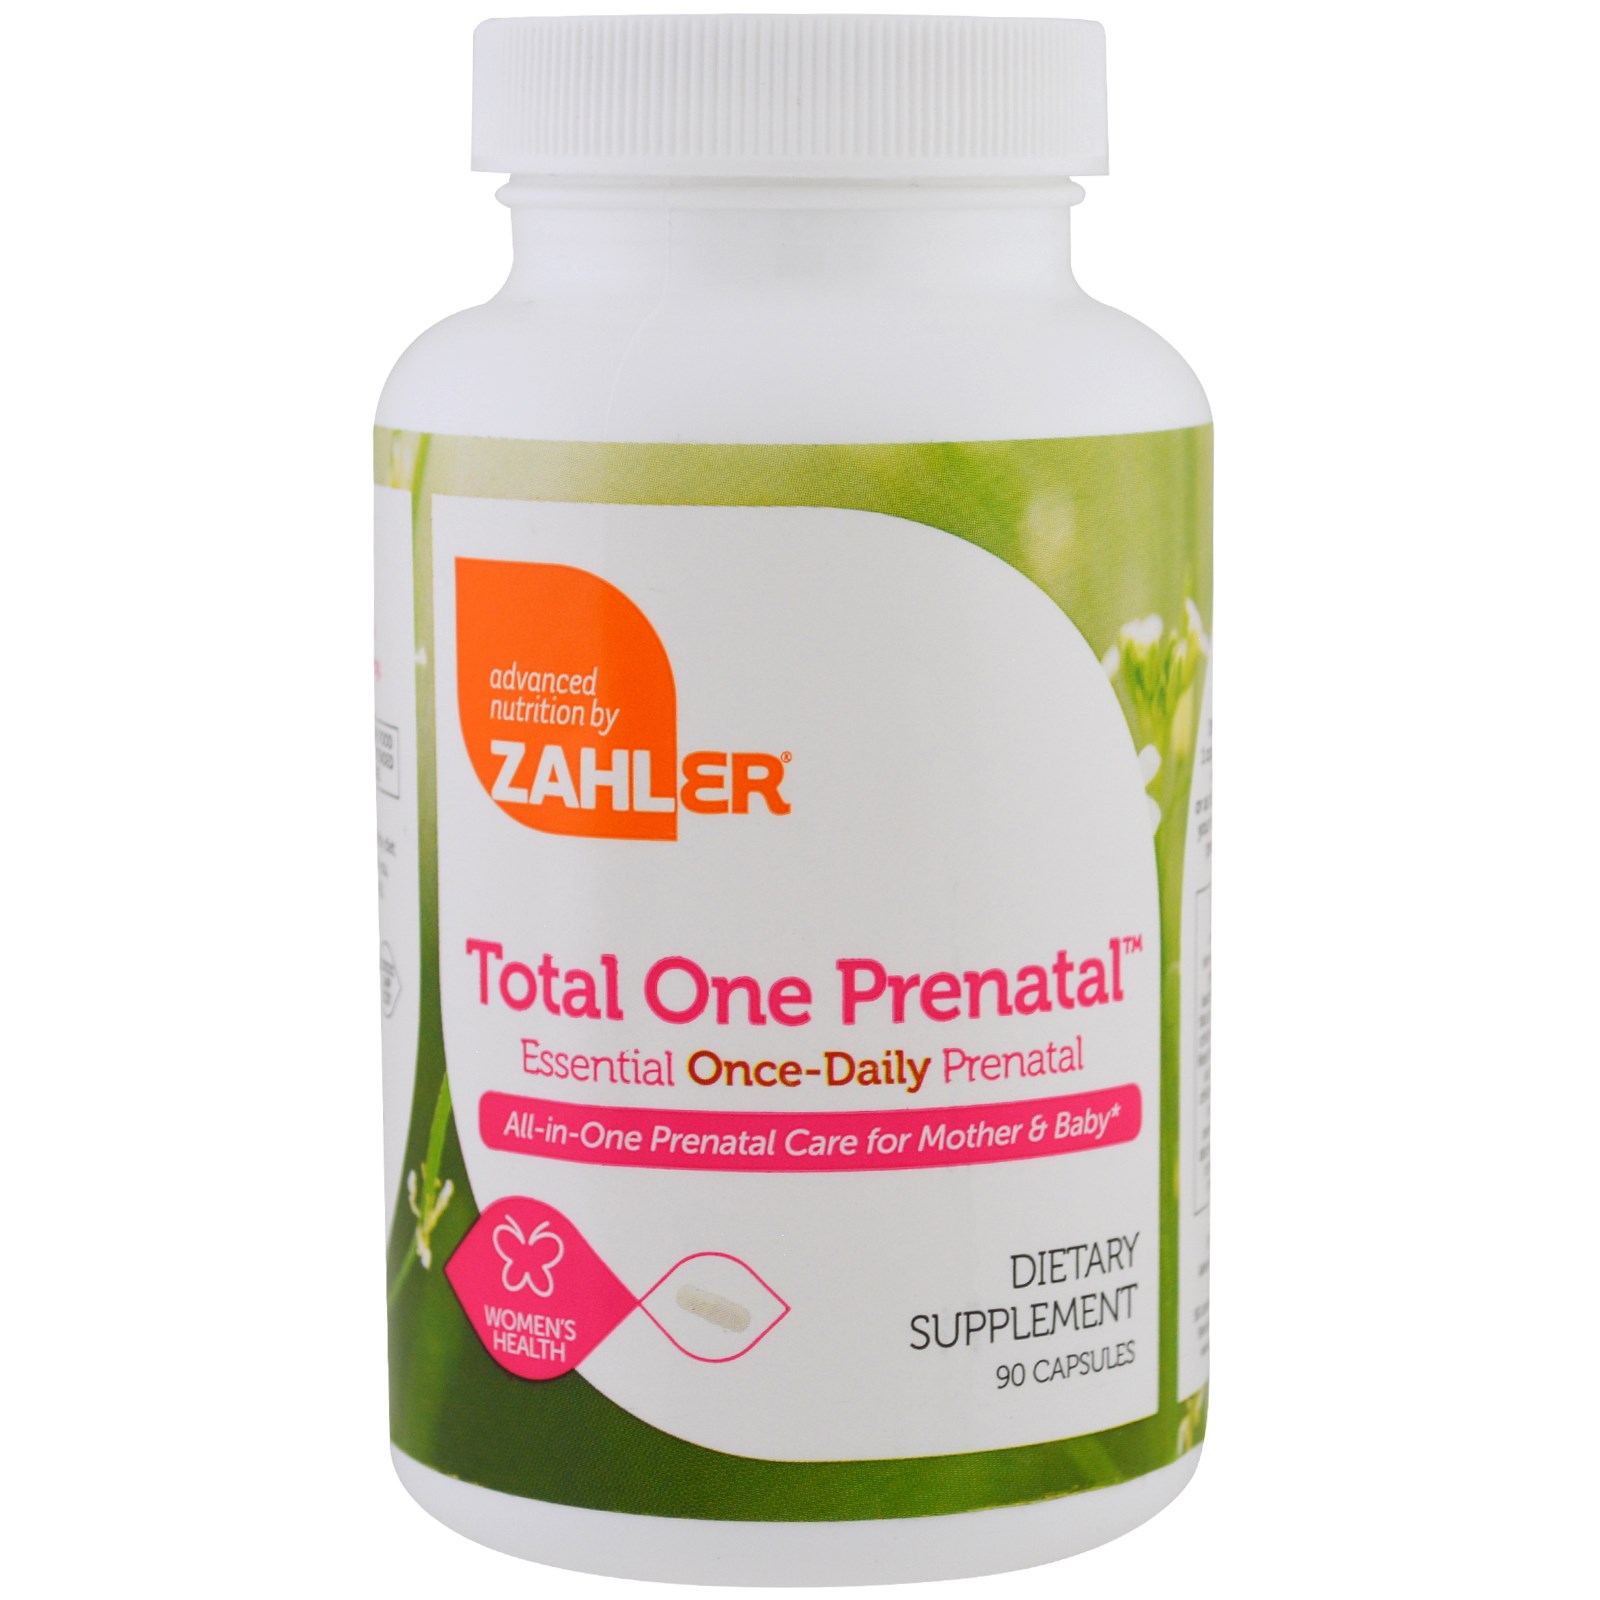 Zahler, Total One Prenatal, предродовой комплекс с необходимыми компонентами для приема один раз в день, 90 капсул